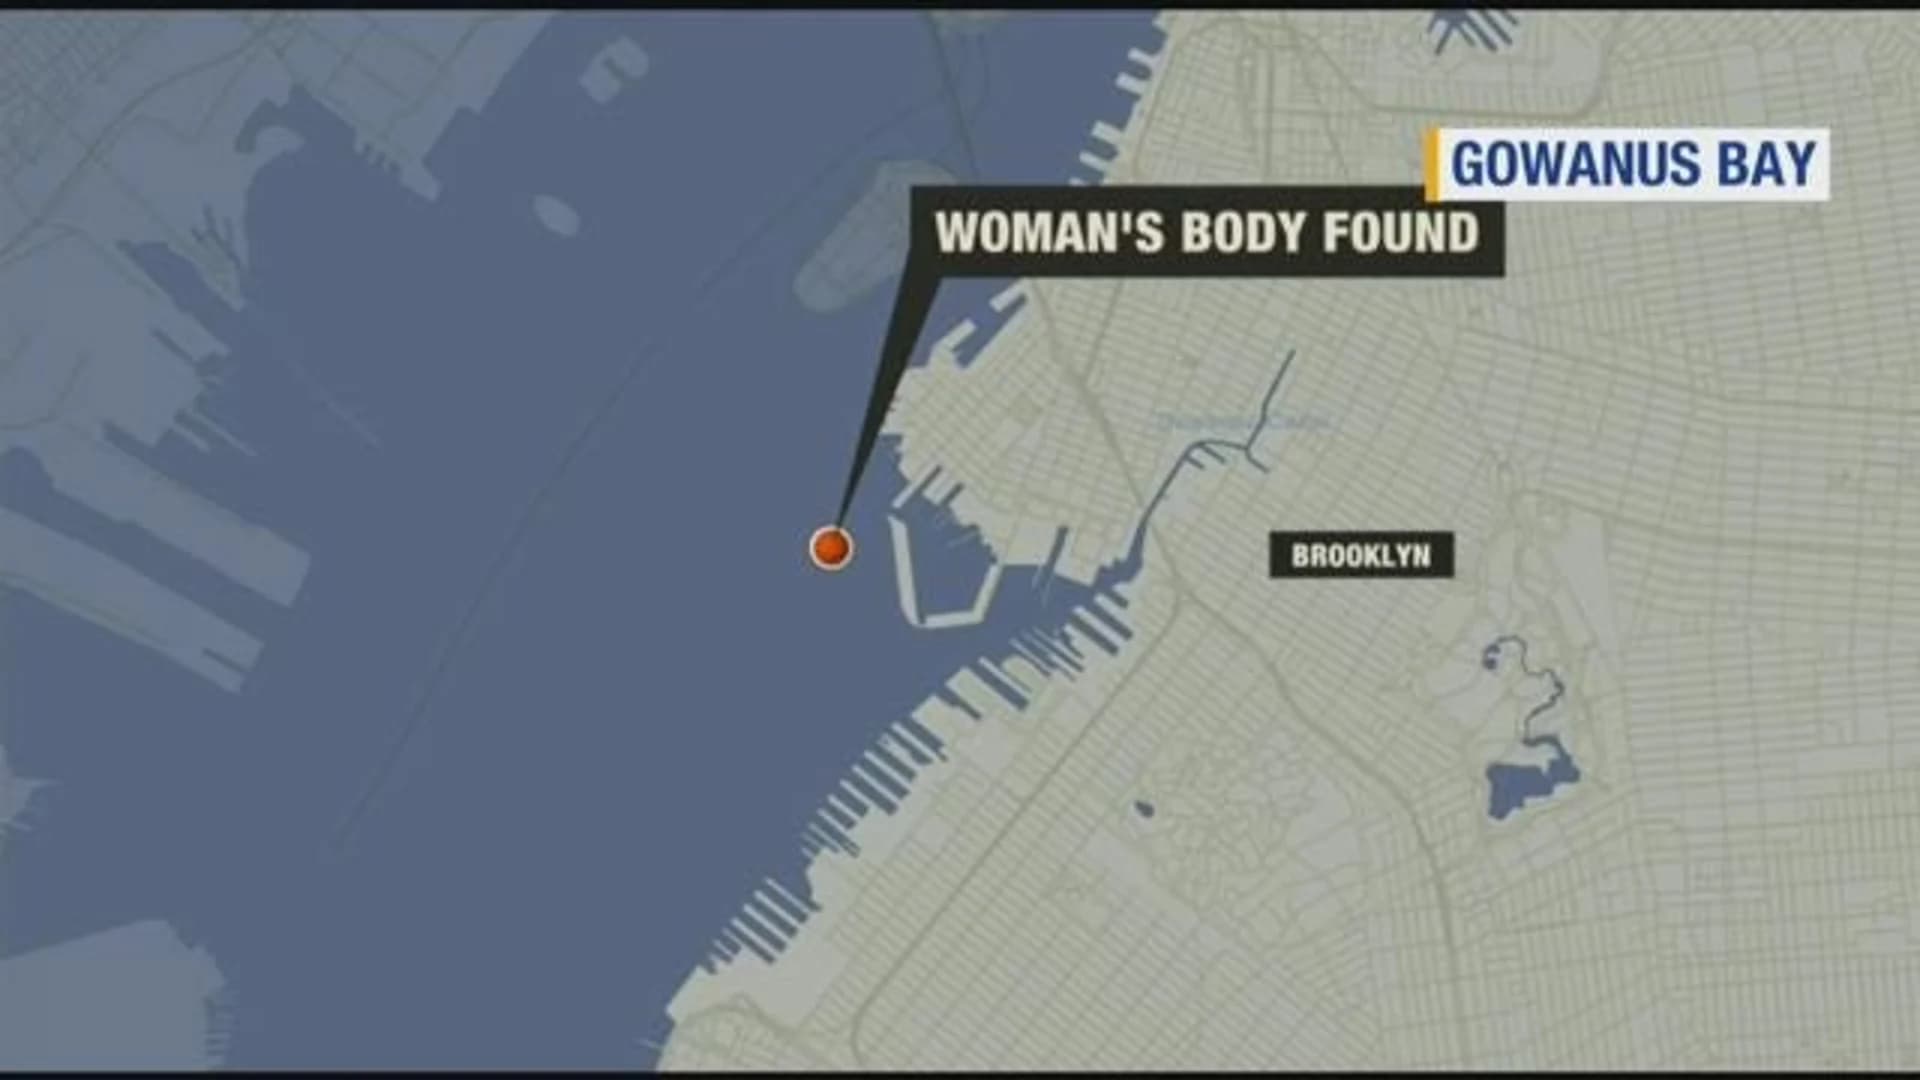 Police ID body of woman found in Gowanus Bay